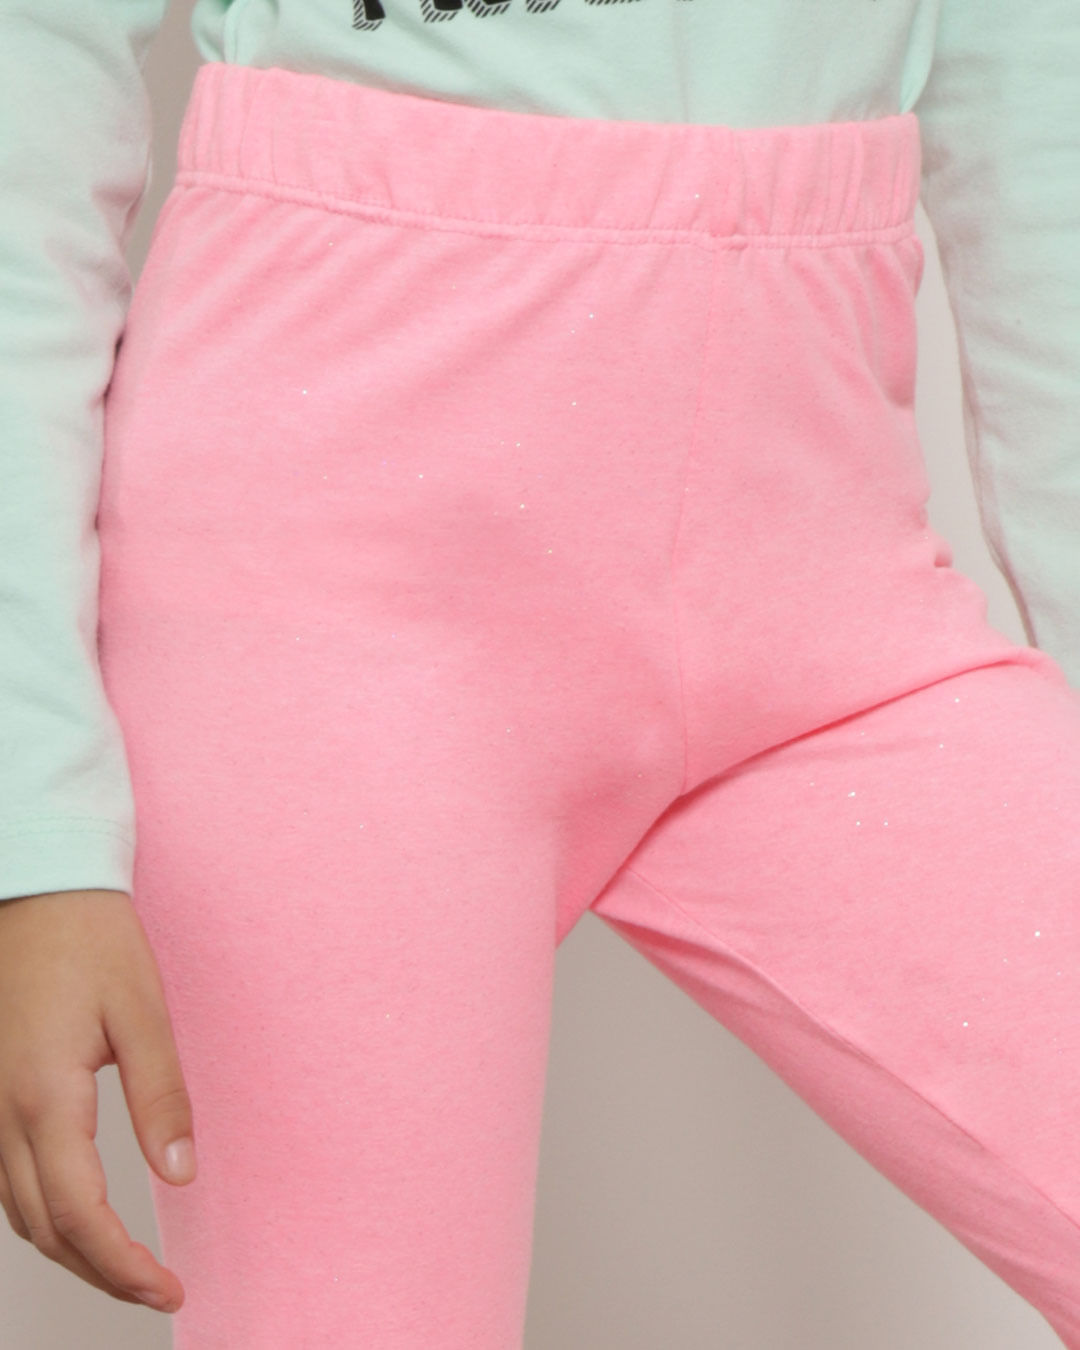 Calça Legging Infantil Com Glitter Rosa Escuro?